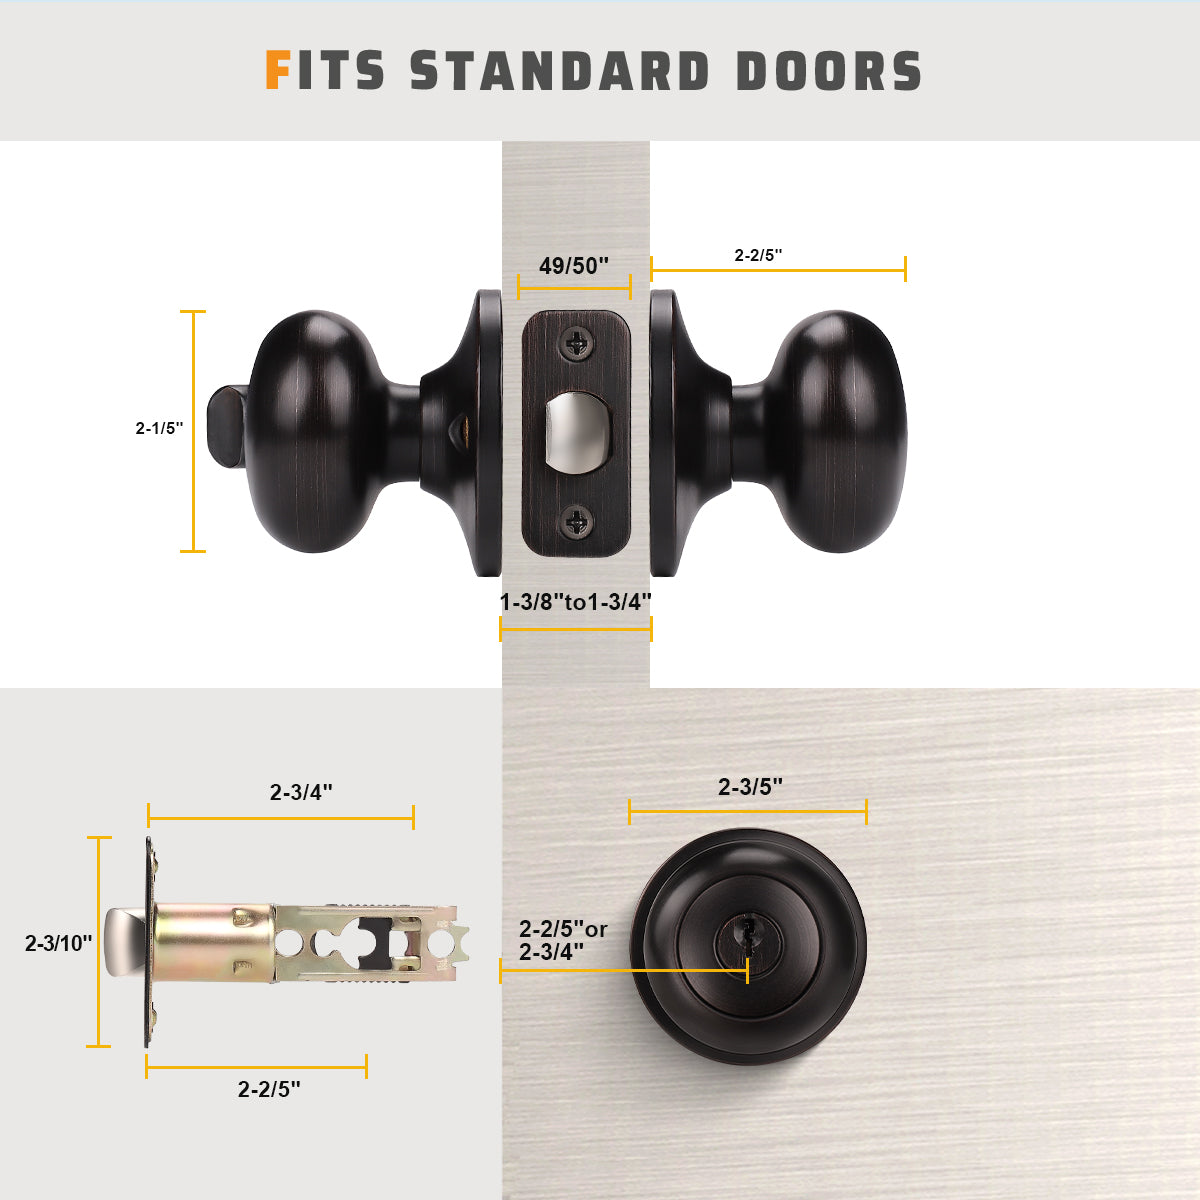 Flat Round Keyed Entry Door Knobs (Different Keys) - DL5766ORBET